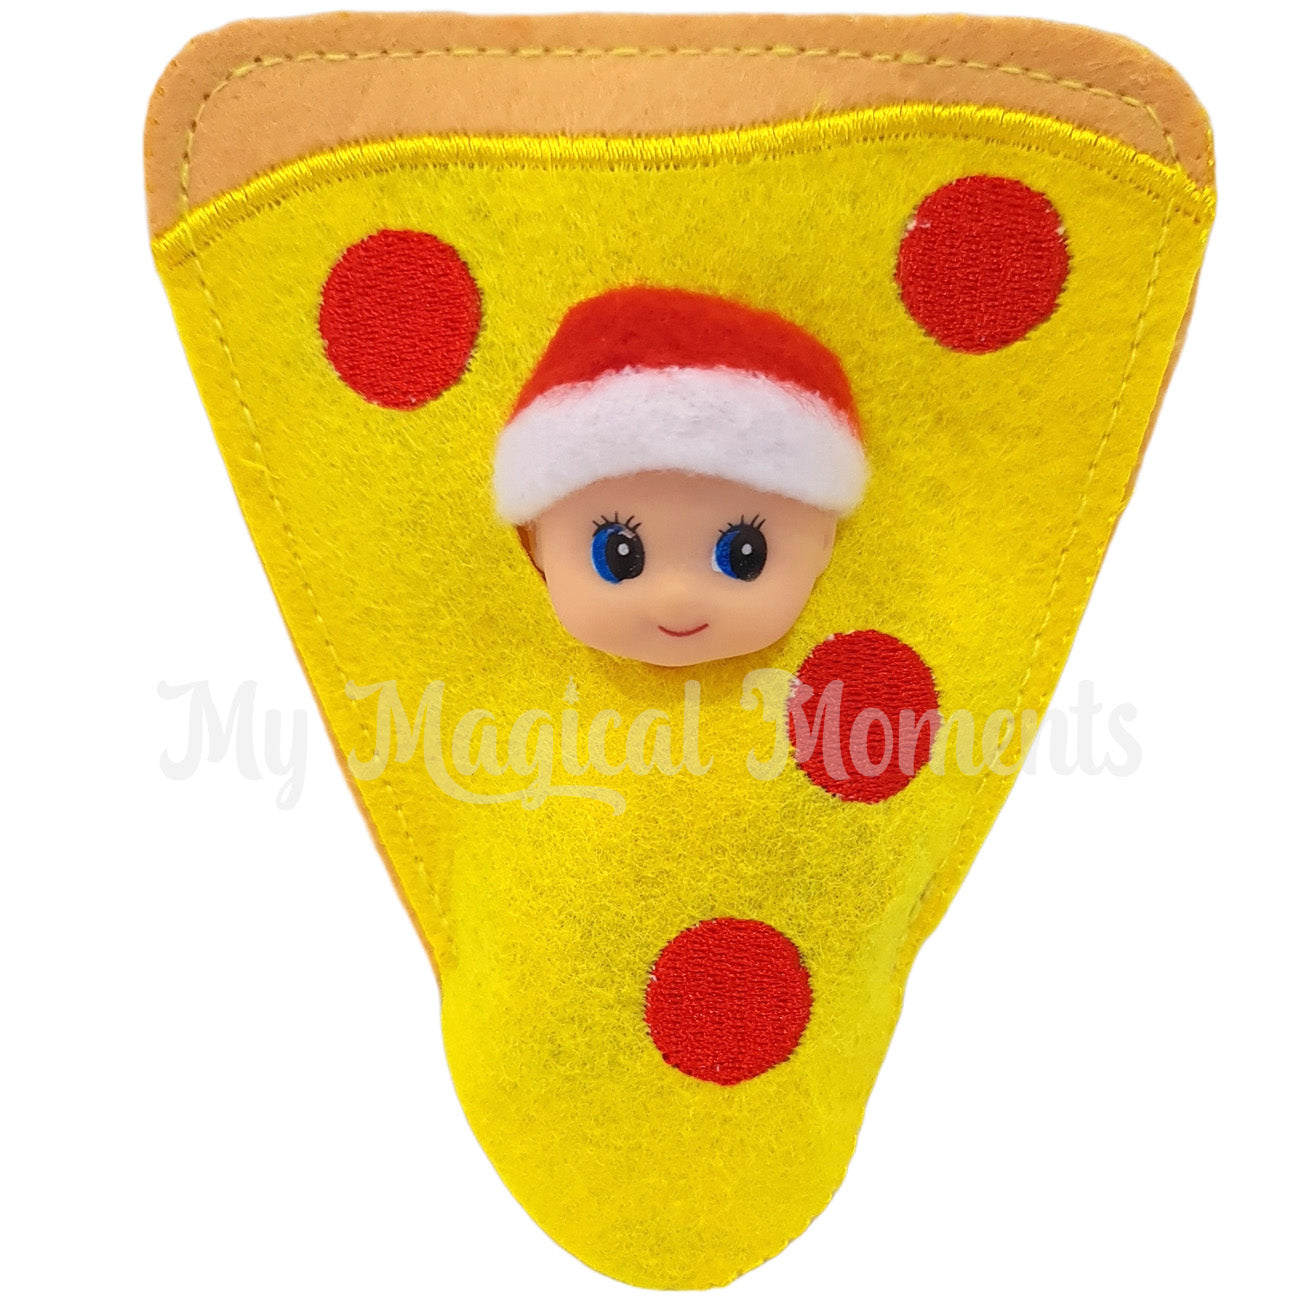 mini pizza costume for baby elf